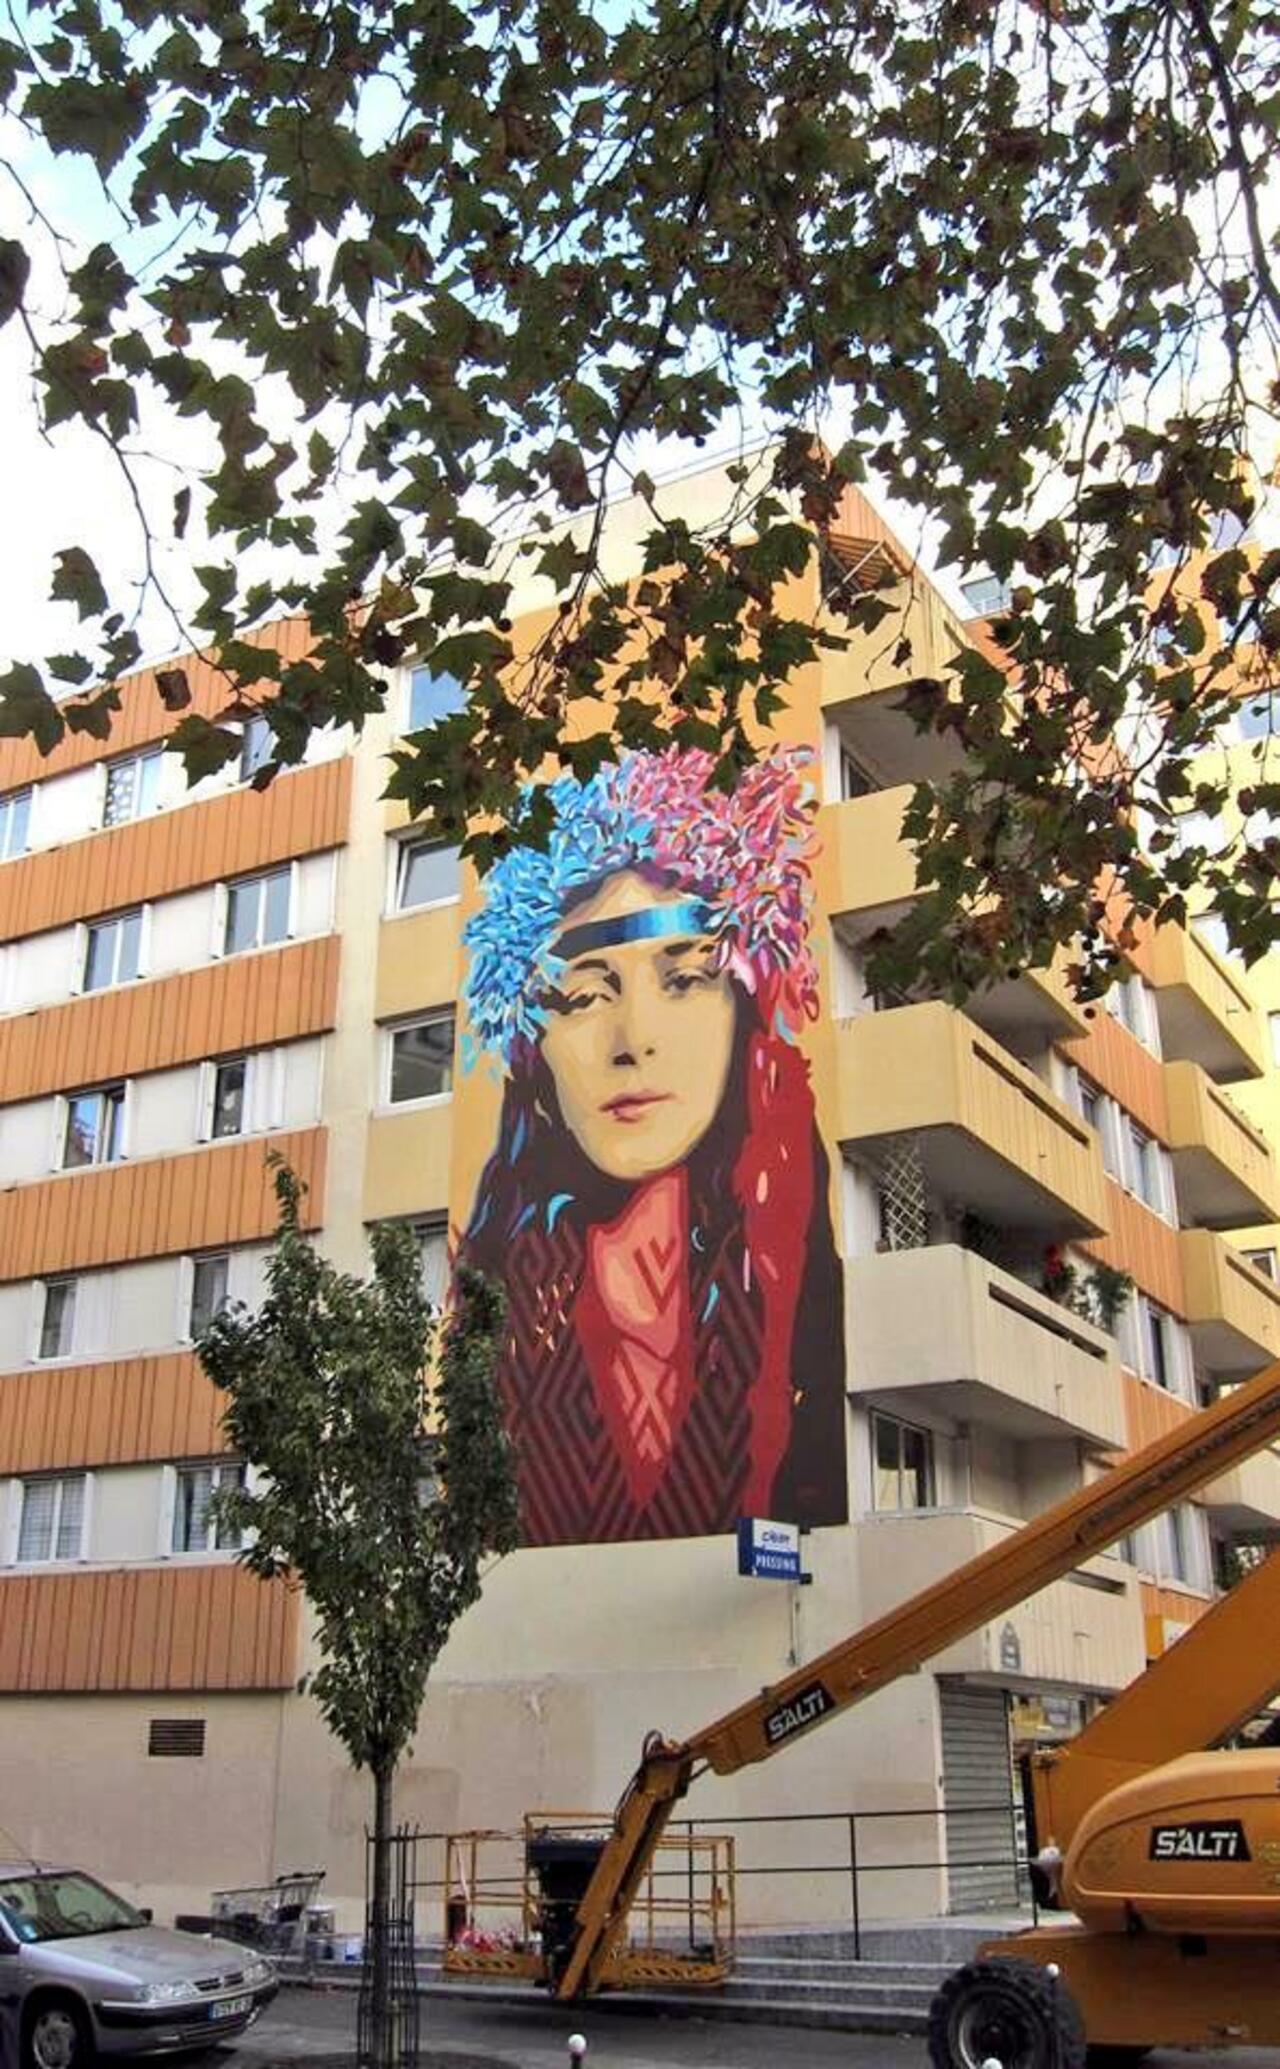 “@Pitchuskita: BTOY 
Paris
#Streetart #art #graffiti #mural http://t.co/QOqUz34wxa”